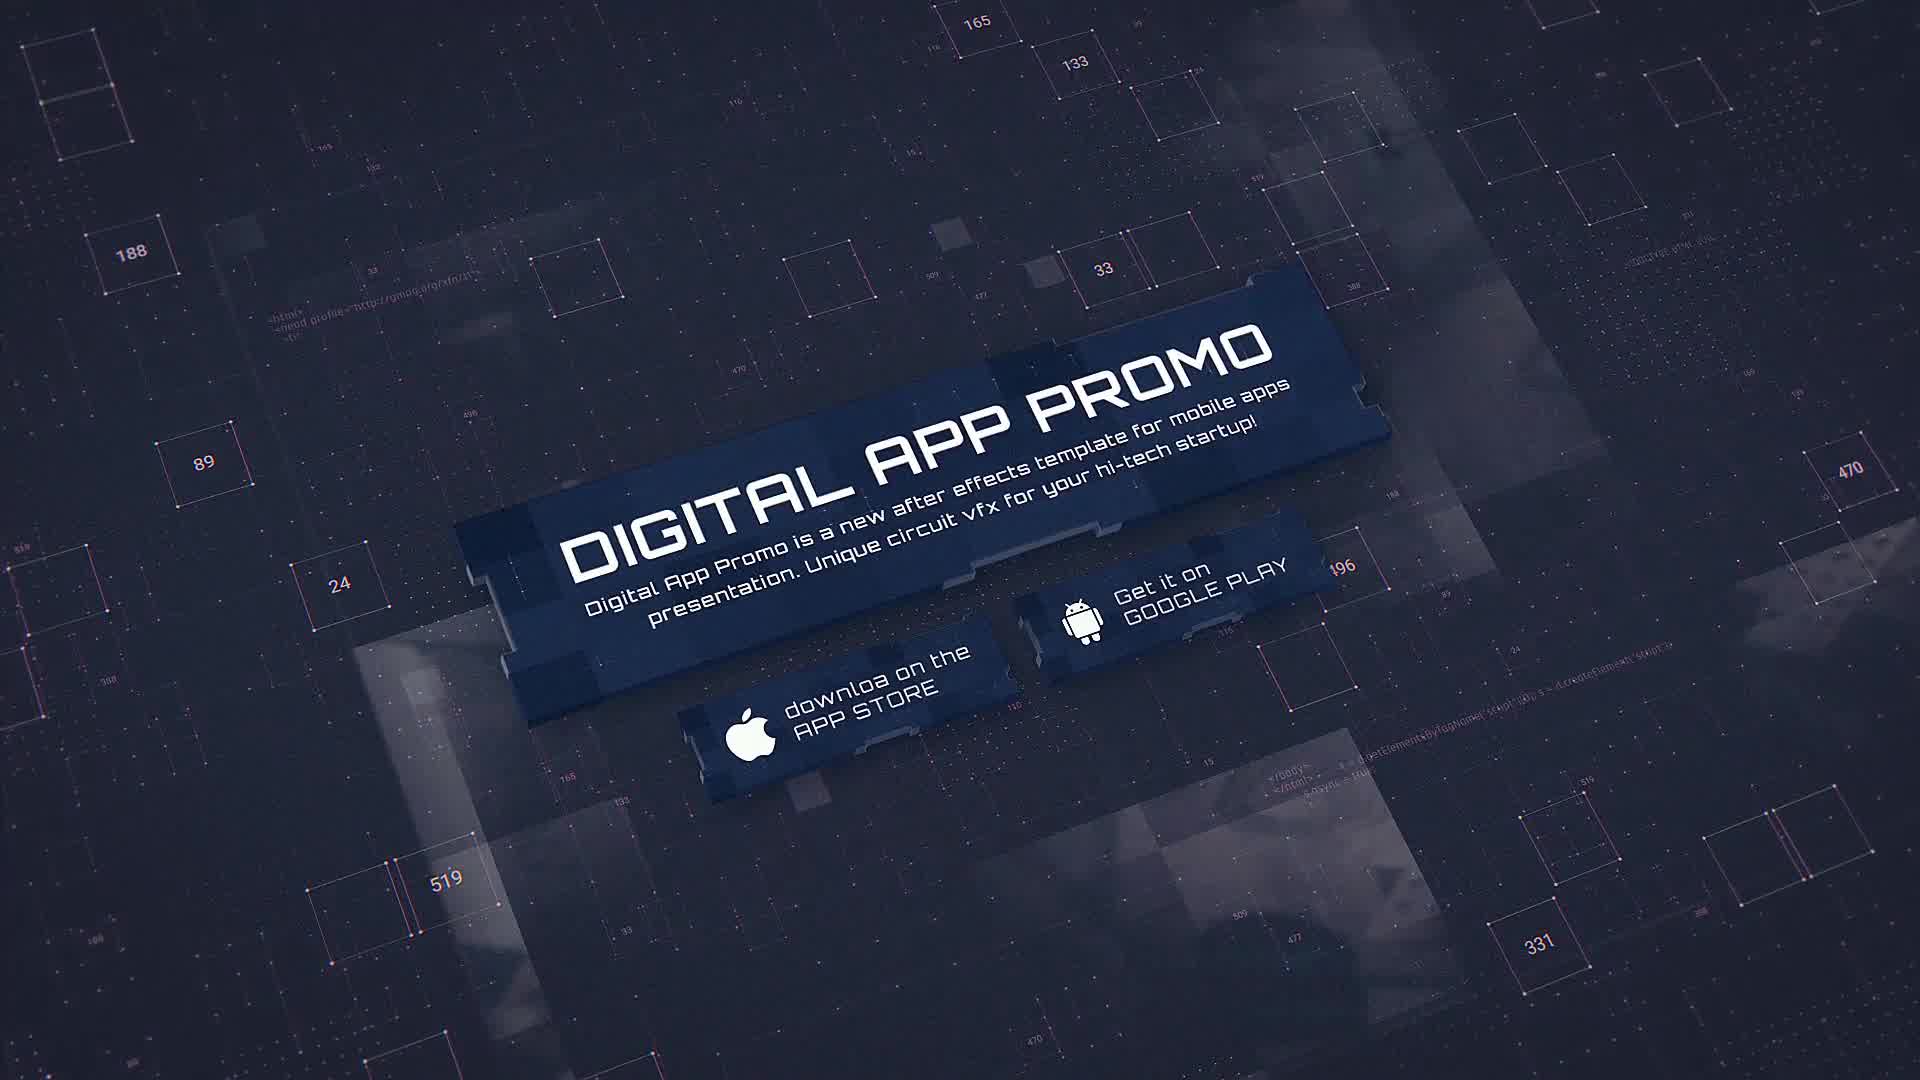 Digital App Promo Android Videohive 23860820 Premiere Pro Image 11